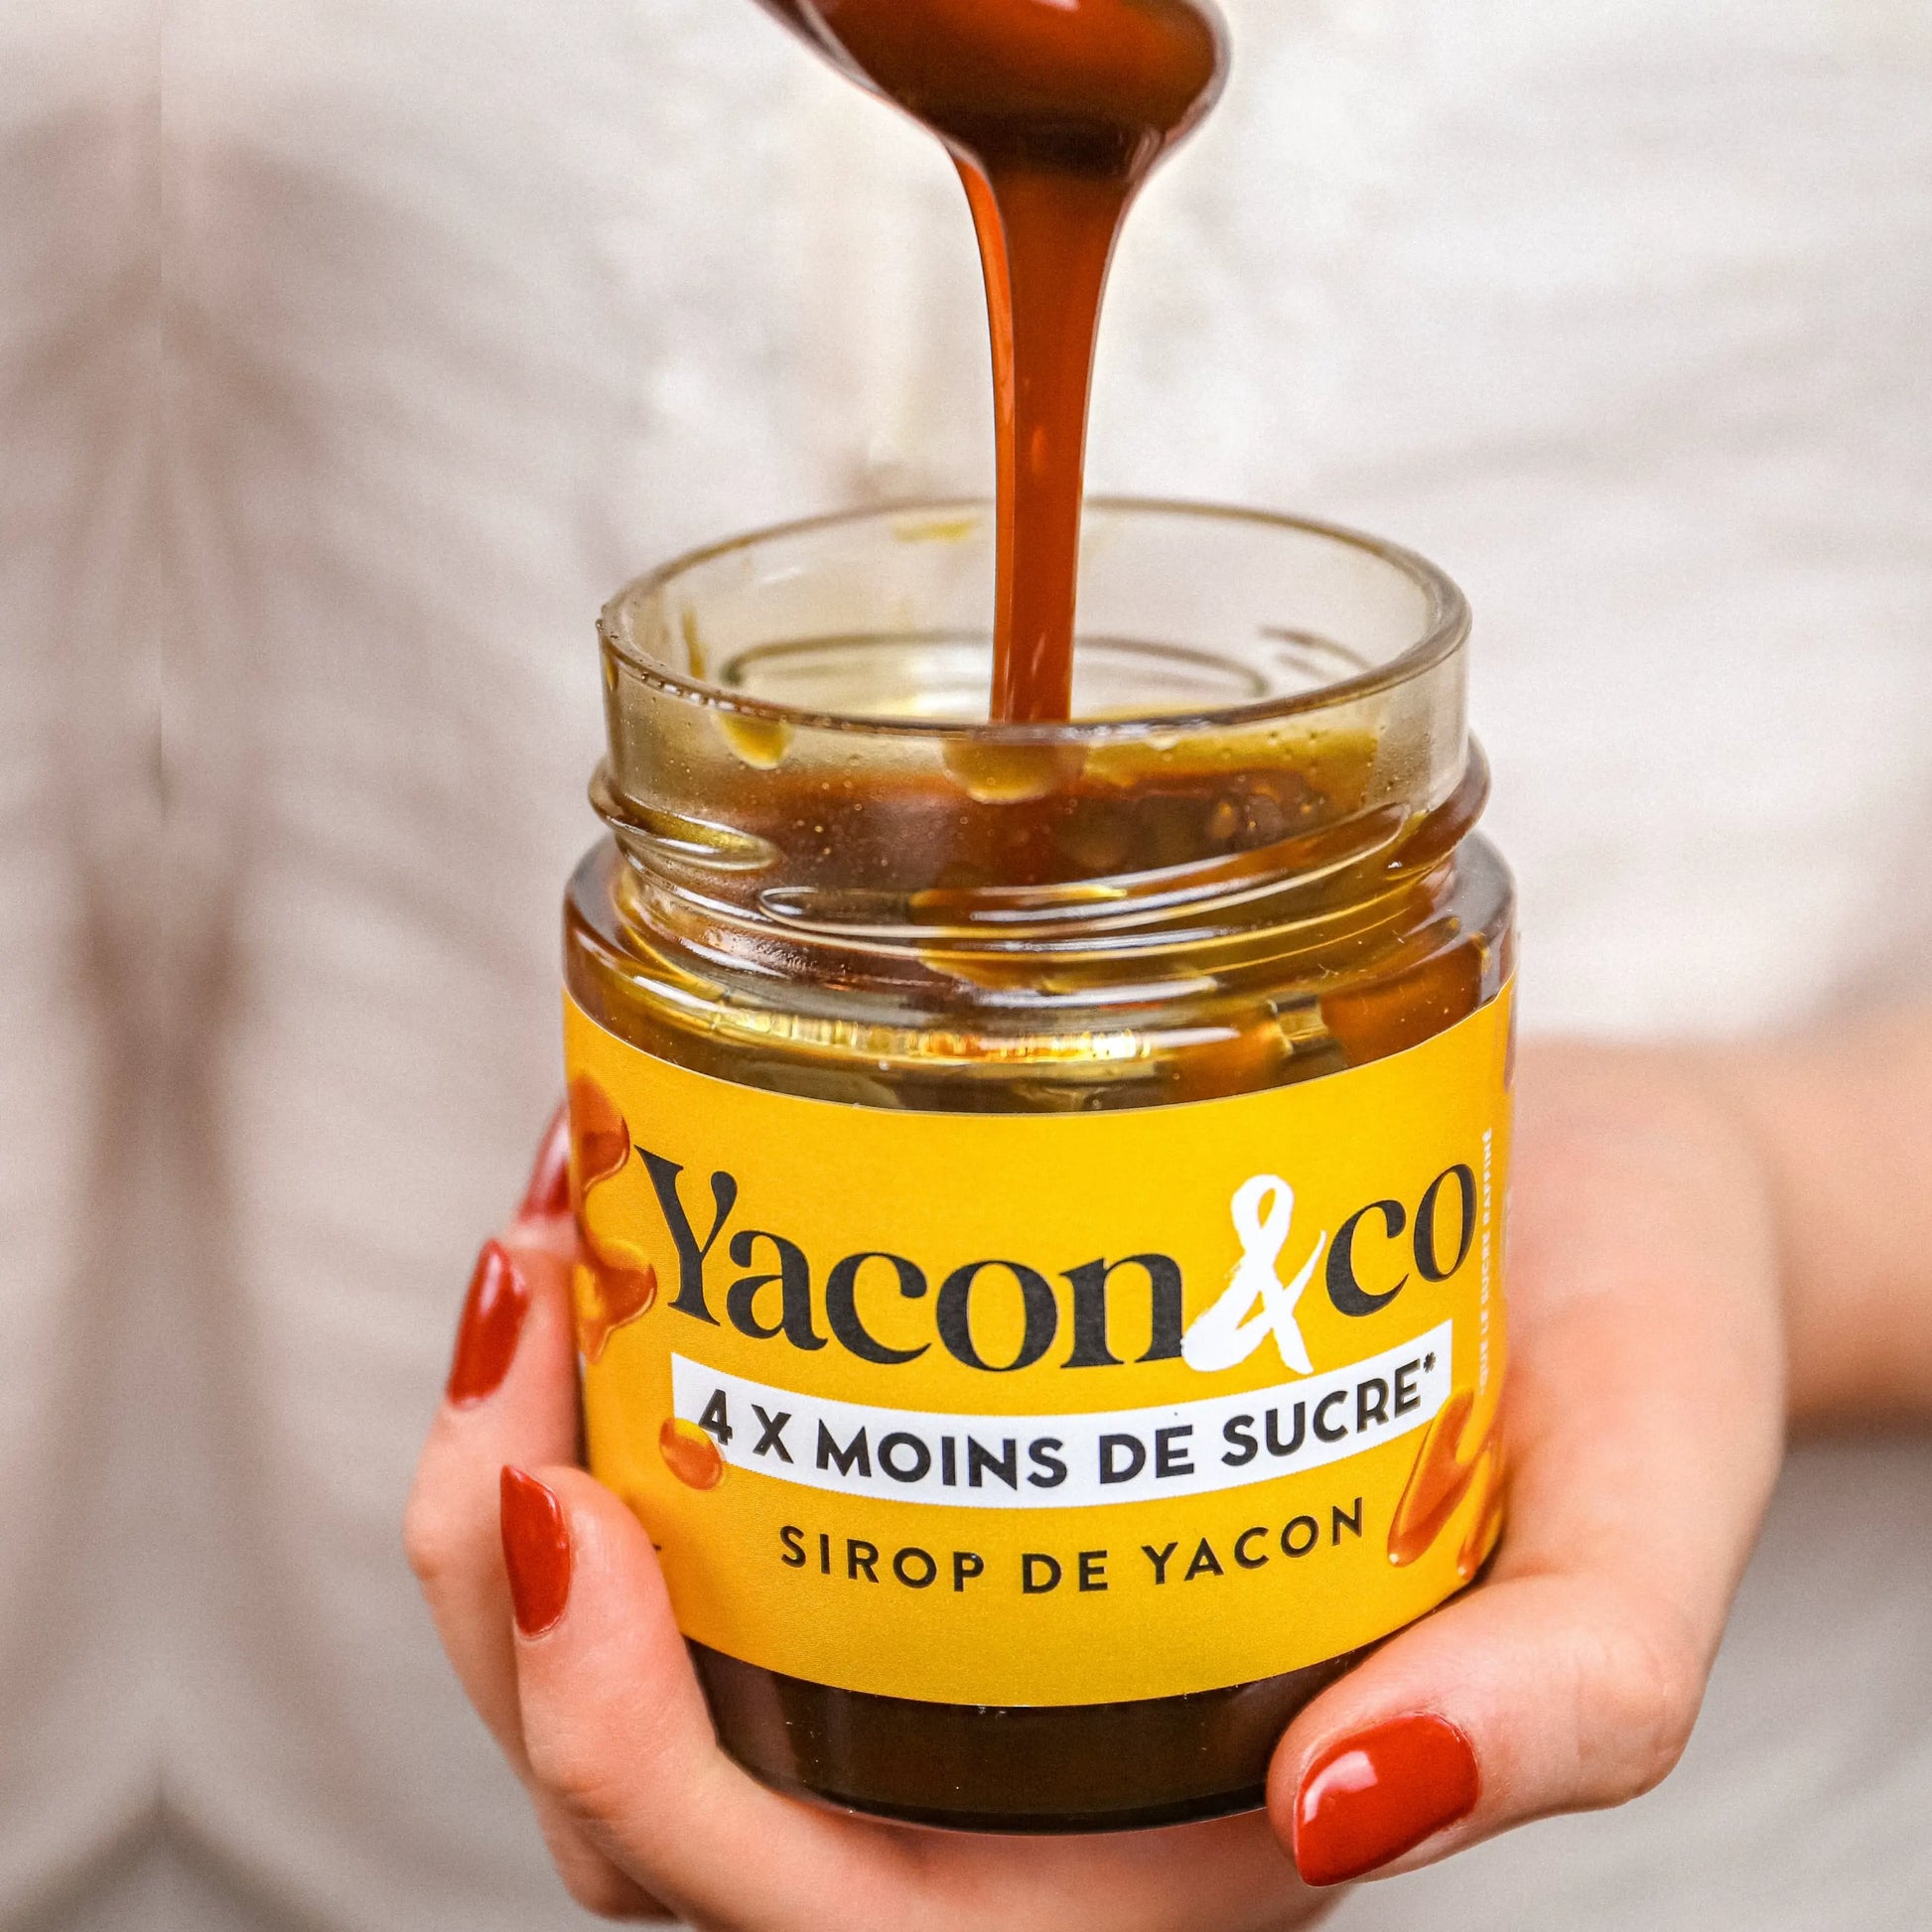 Lot 3 sirops de Yacon – Yacon&co